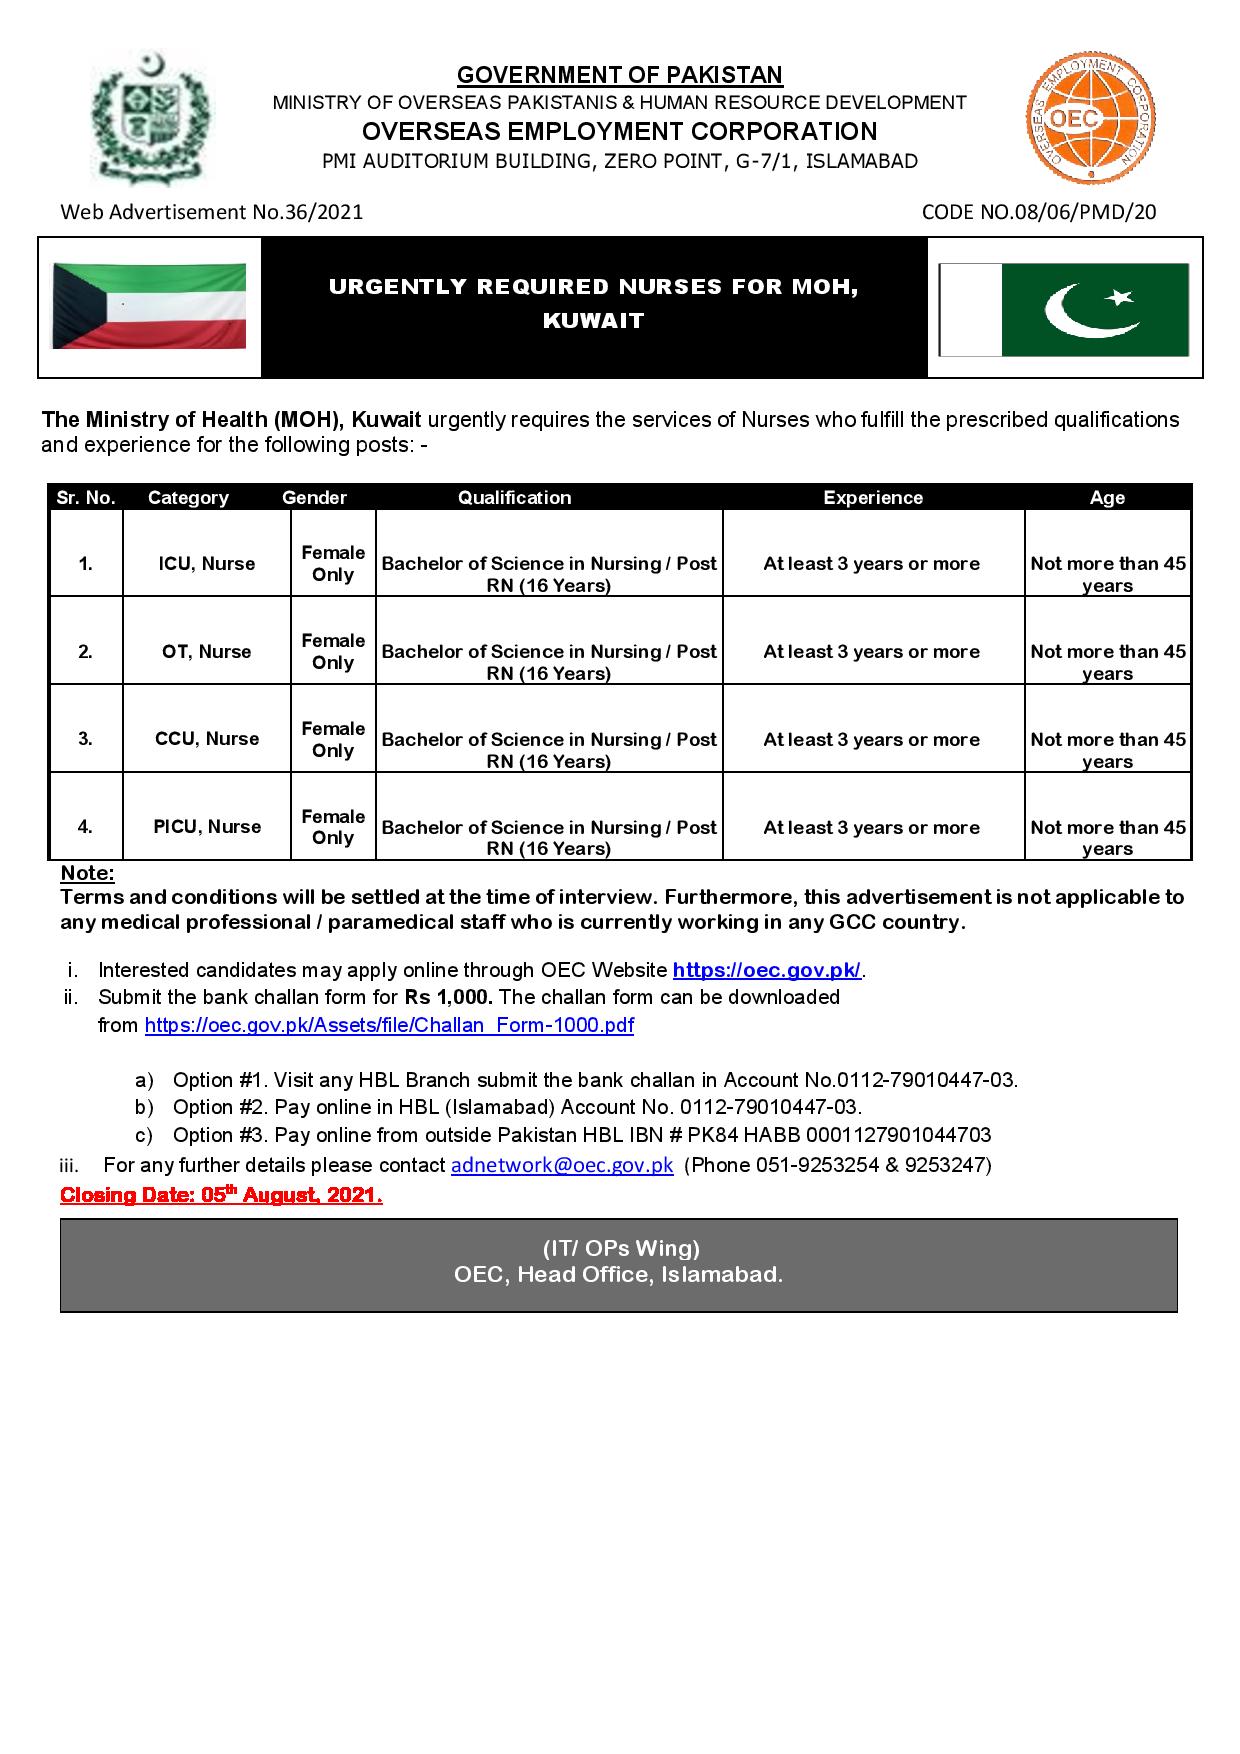 Overseas Employment Corporation OEC Pakistan Announced Nurses Jobs in Ministry of Health Kuwait in July 2021